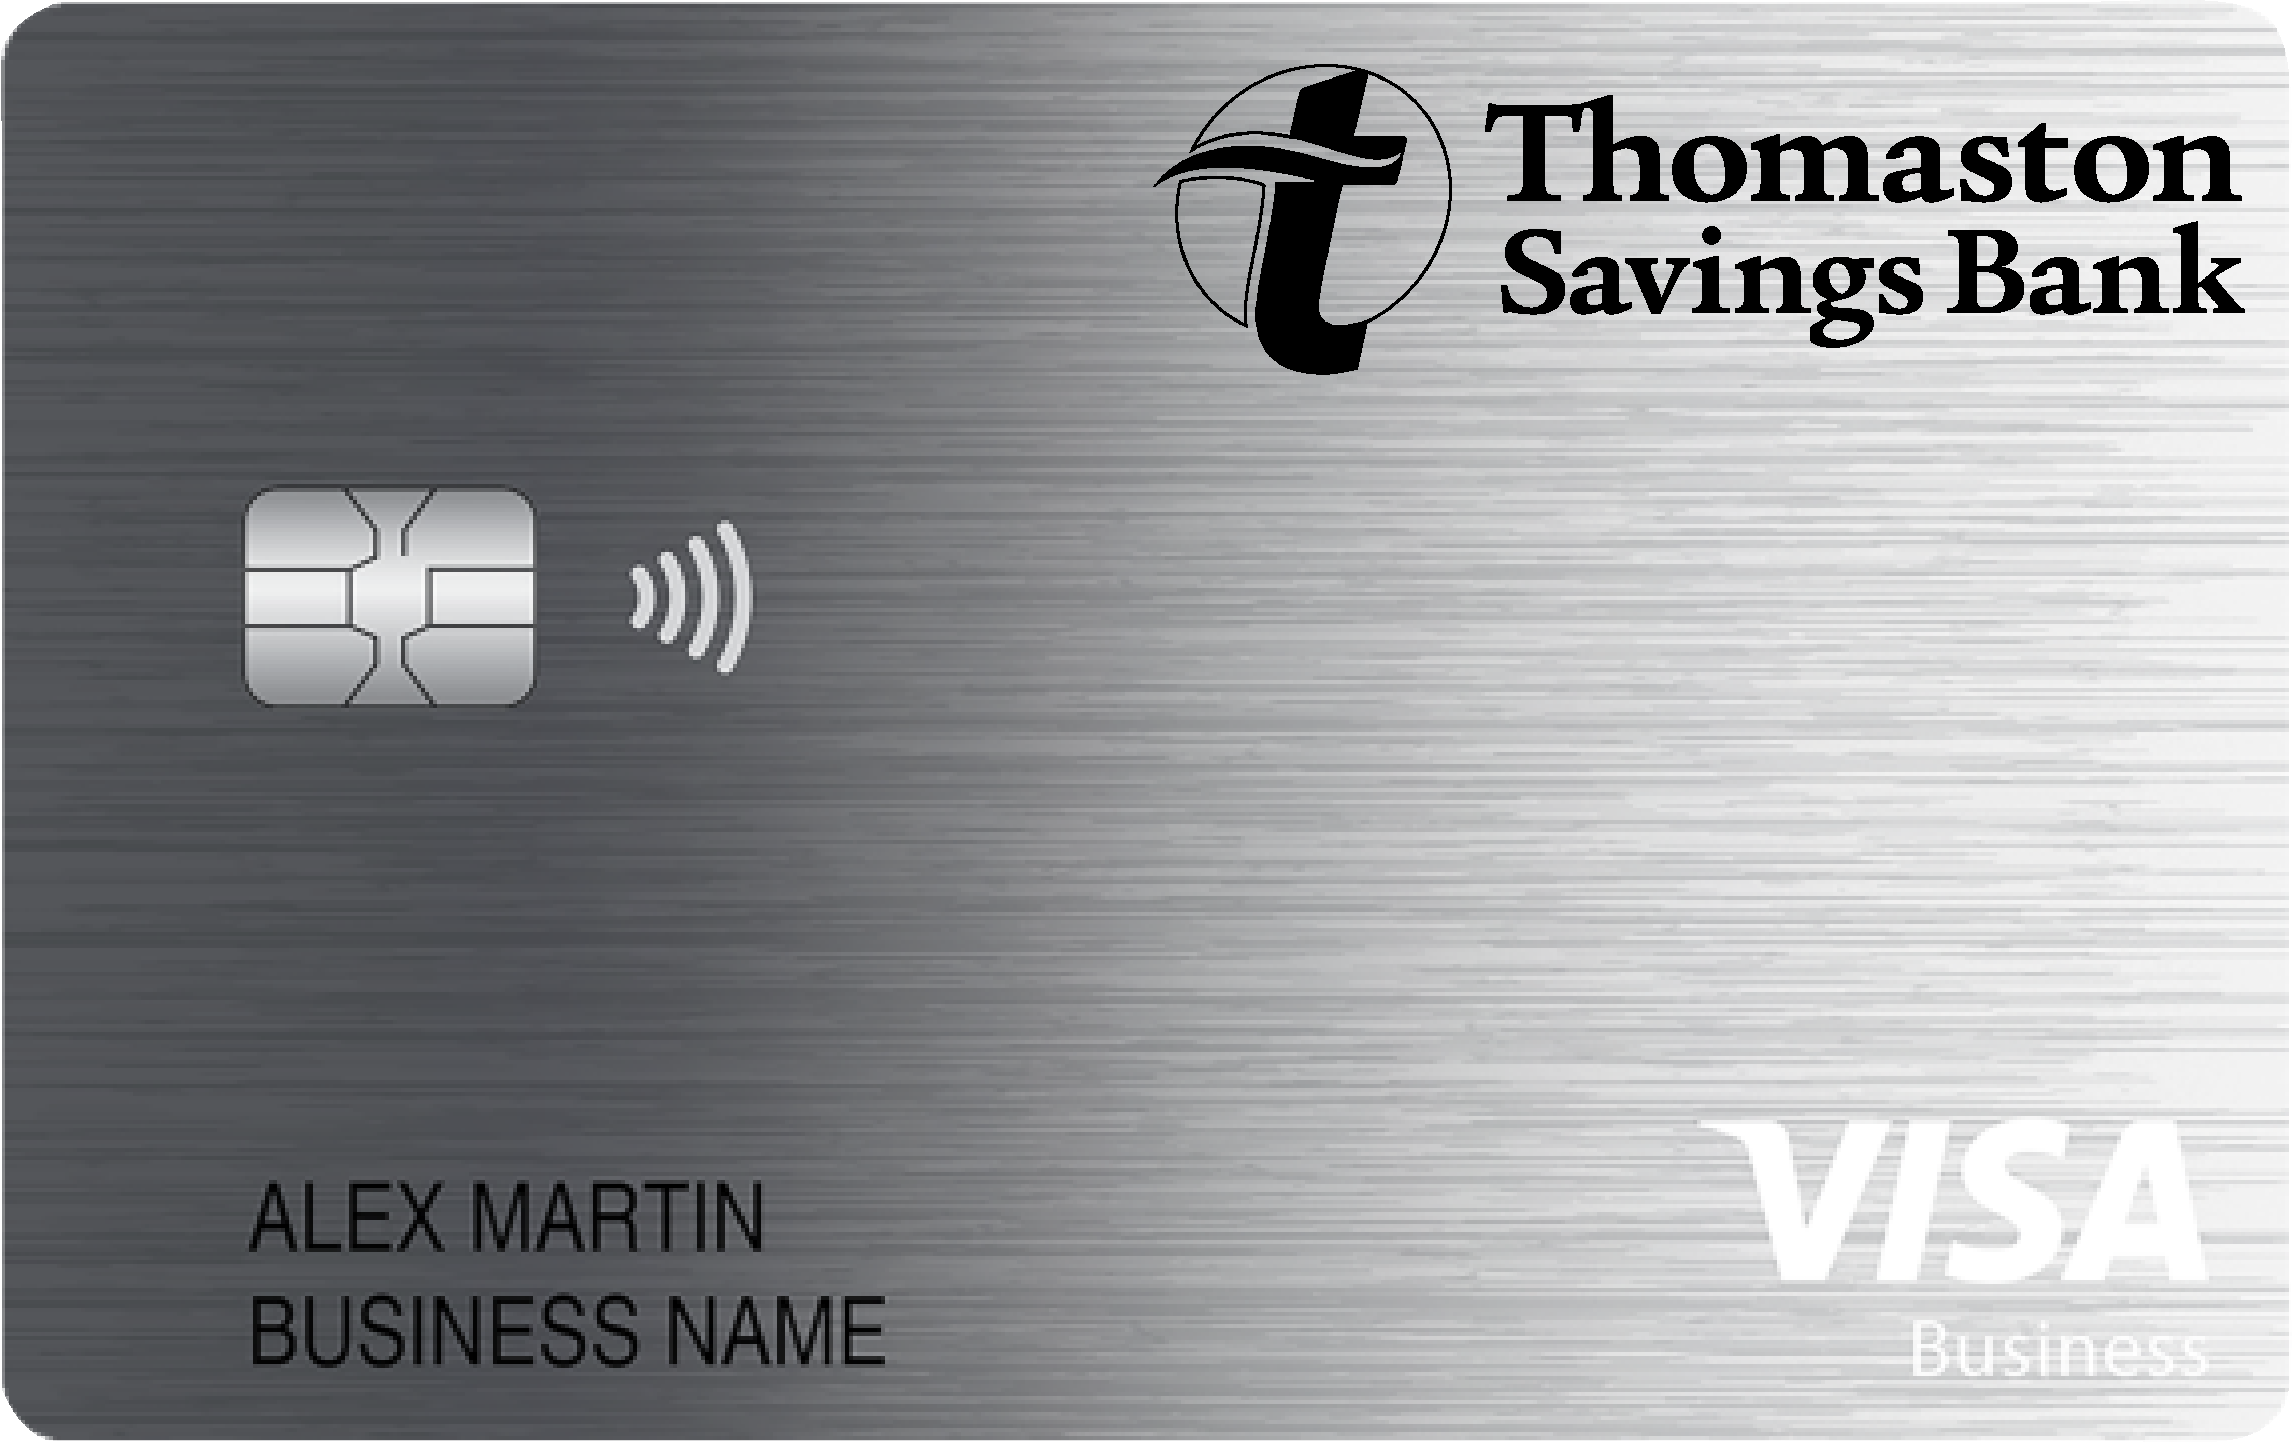 Thomaston Savings Bank Business Card Card